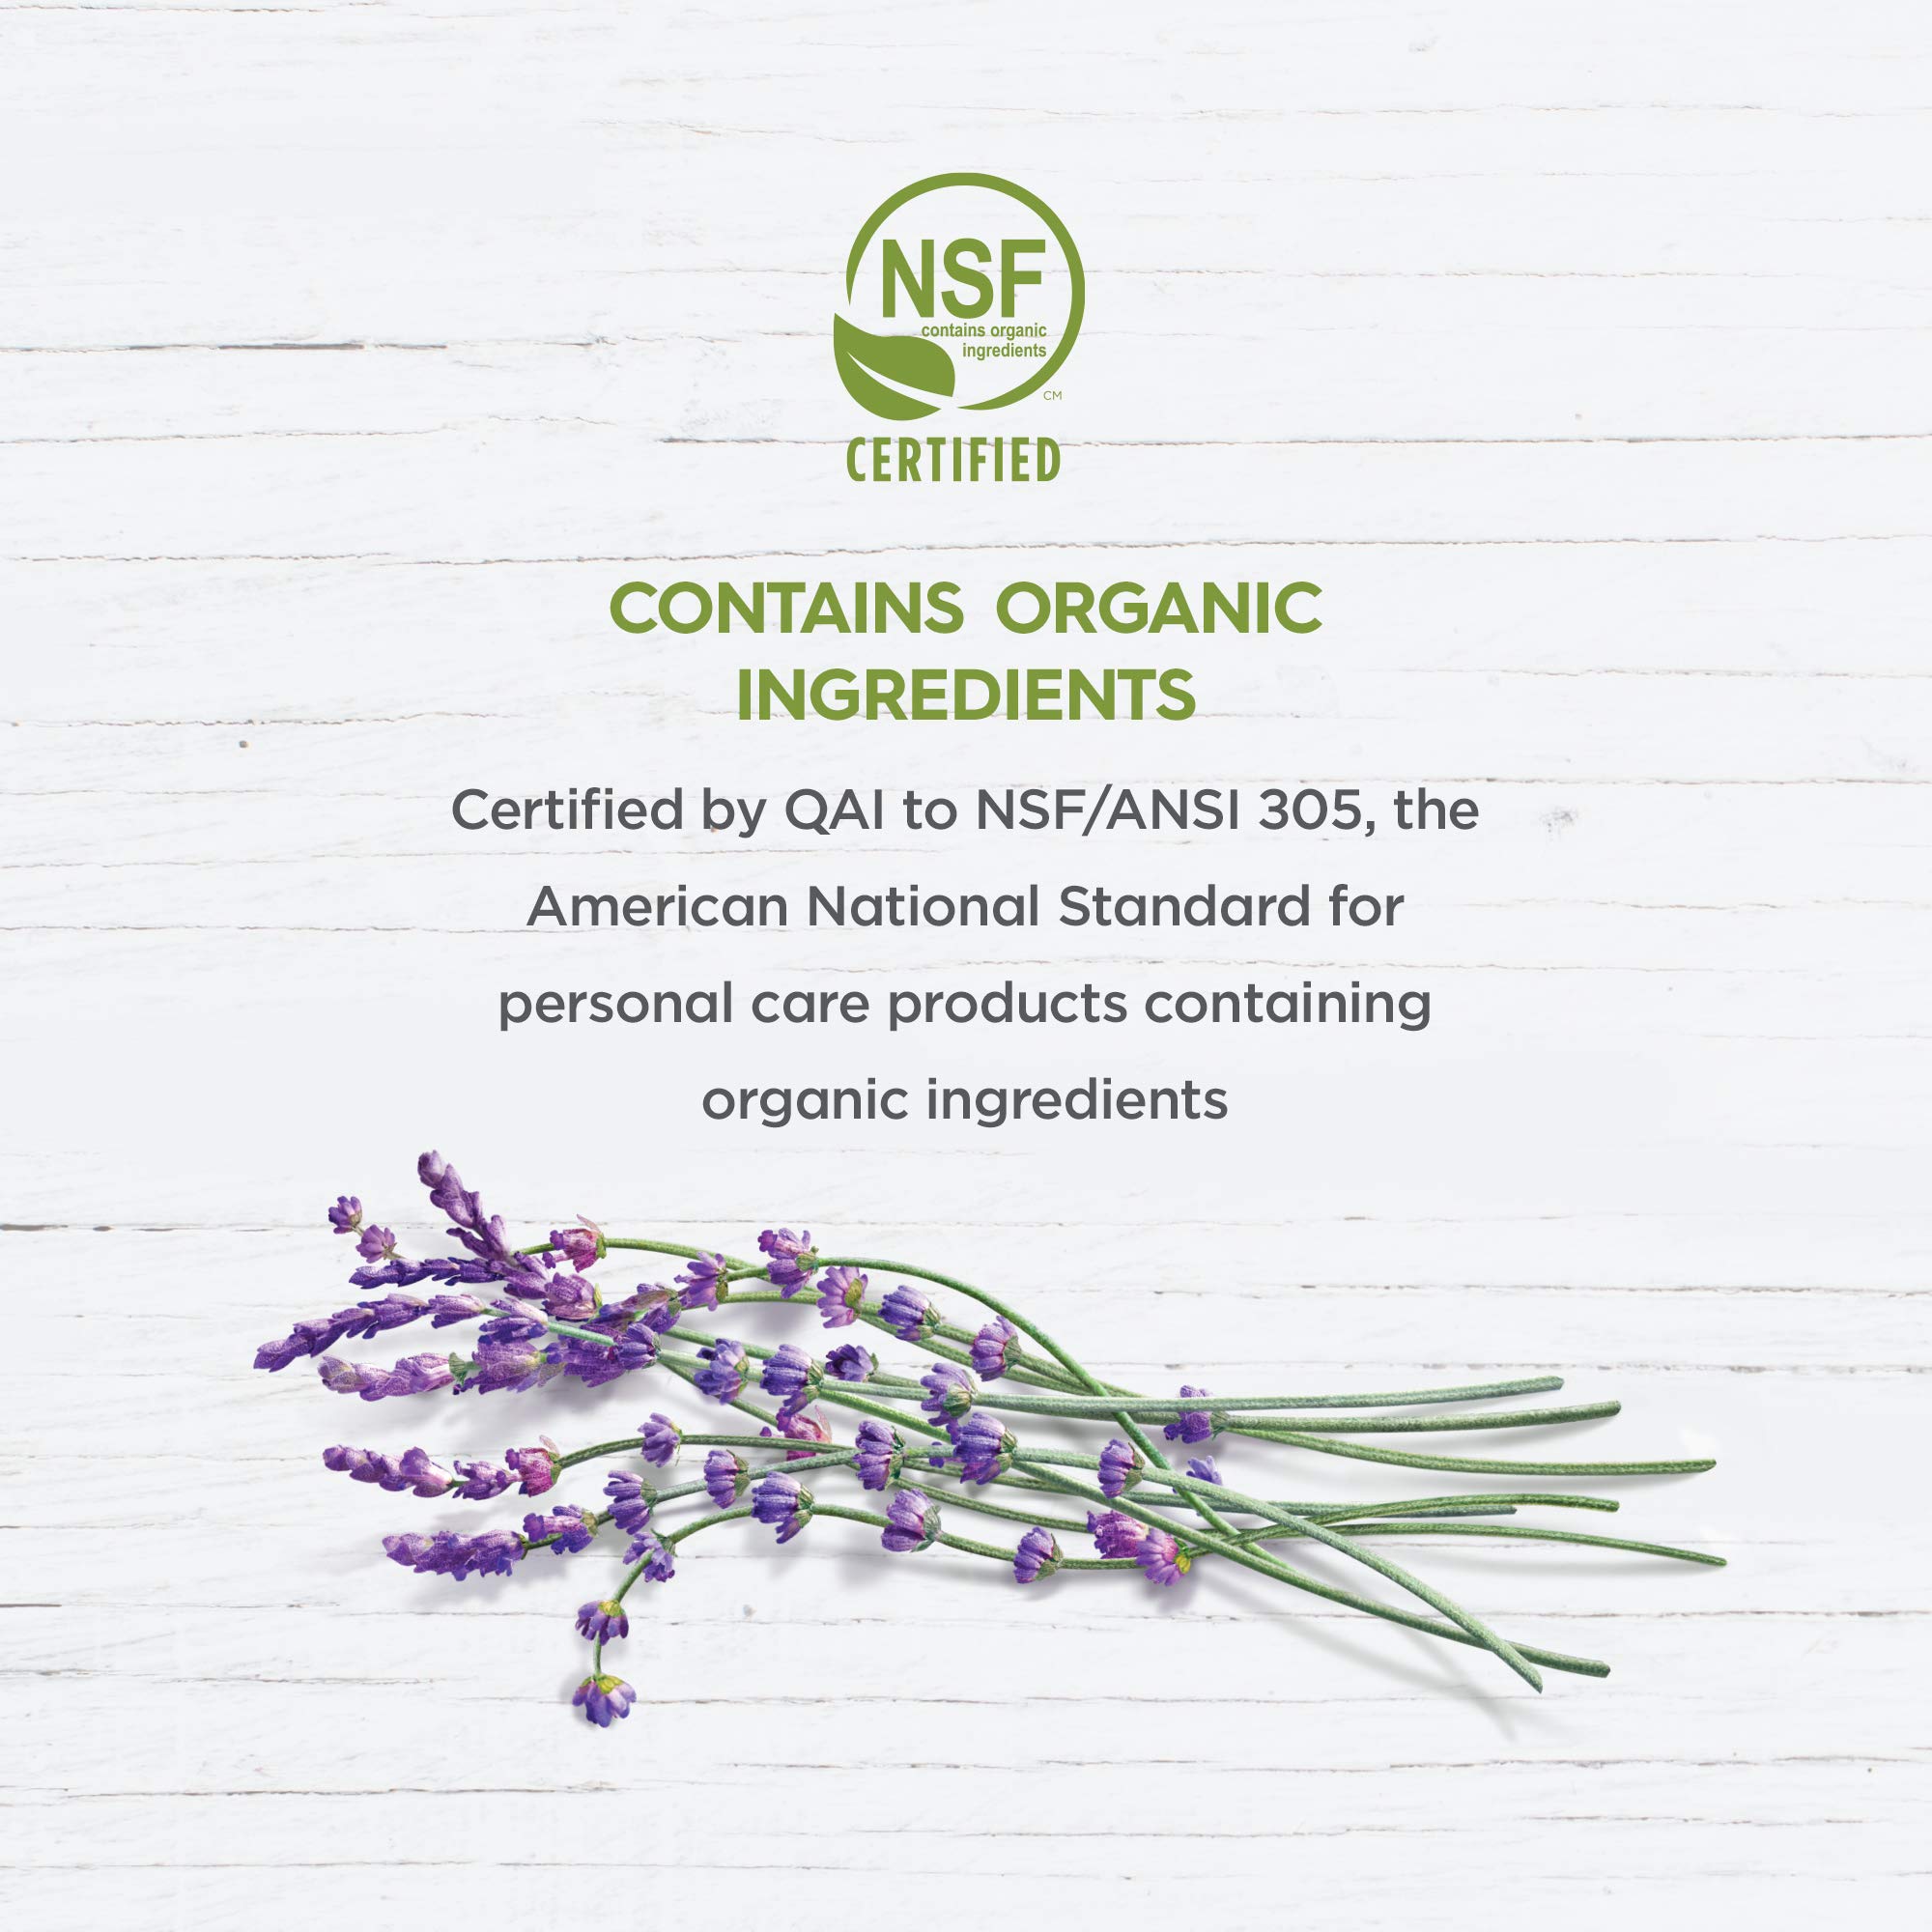 Avalon Organics Conditioner, Nourishing Lavender, 32 Oz